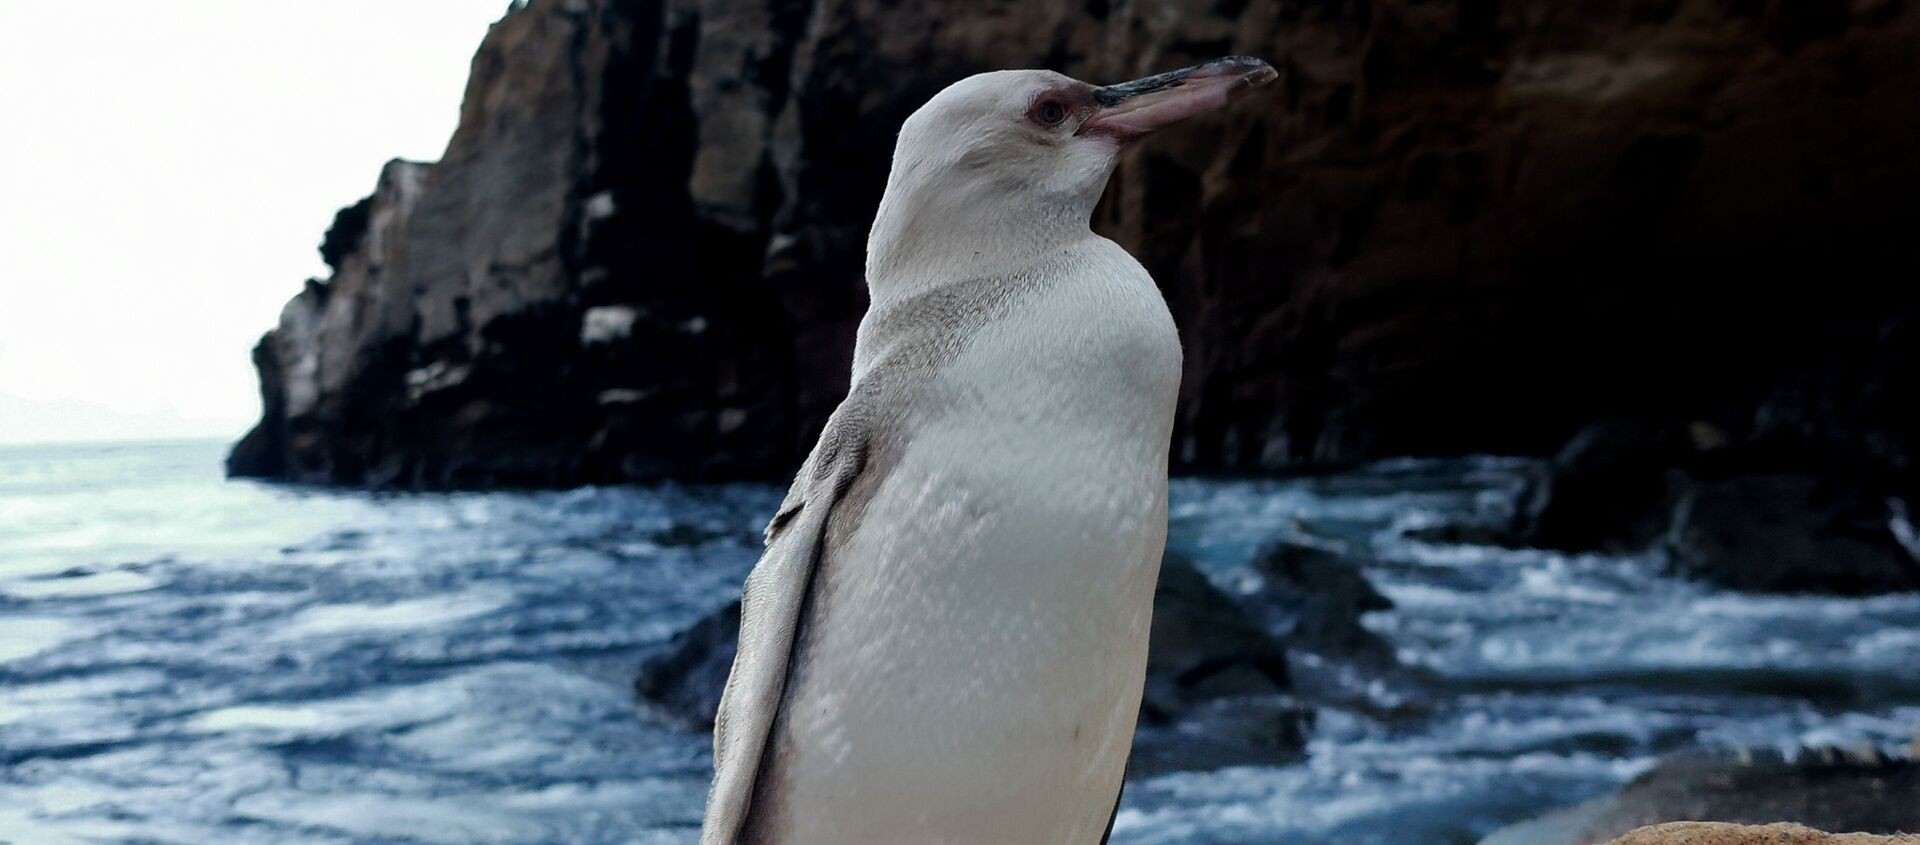 Un pingüino blanco en las Galápagos - Sputnik Mundo, 1920, 27.11.2020